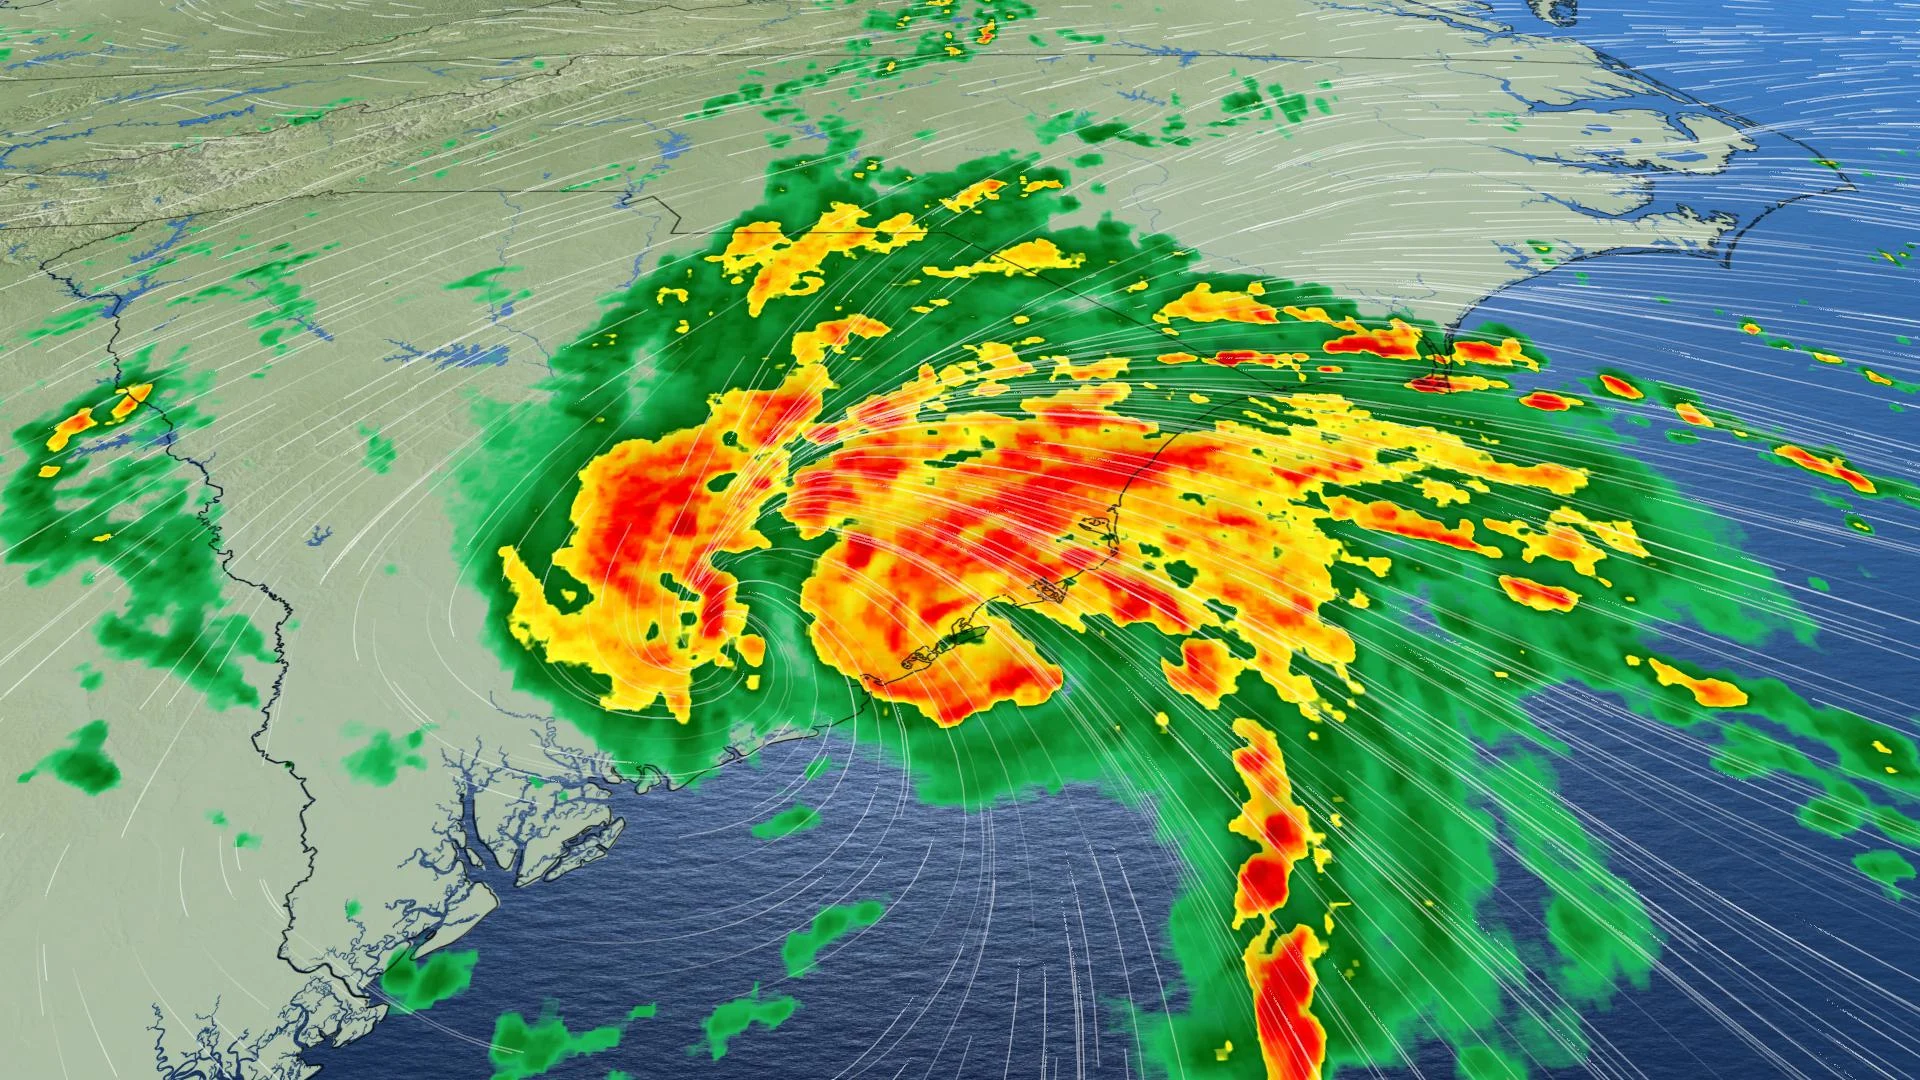 Bertha makes landfall in South Carolina, heavy rain and intense winds expected